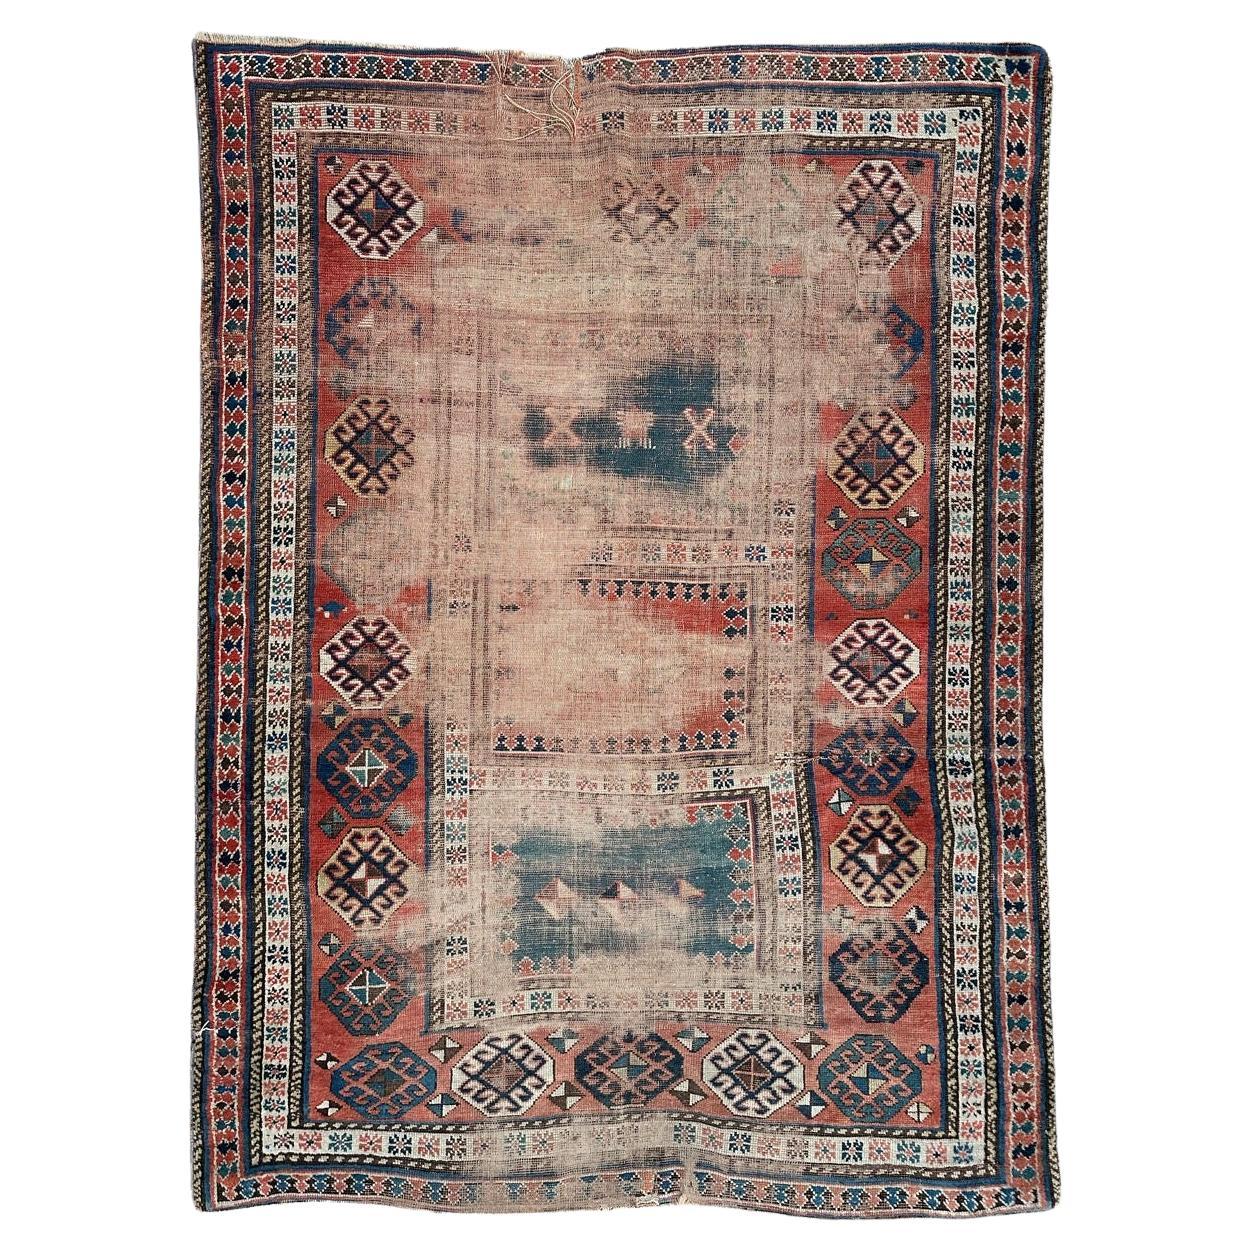 Bobyrug’s pretty antique distressed Kazak rug